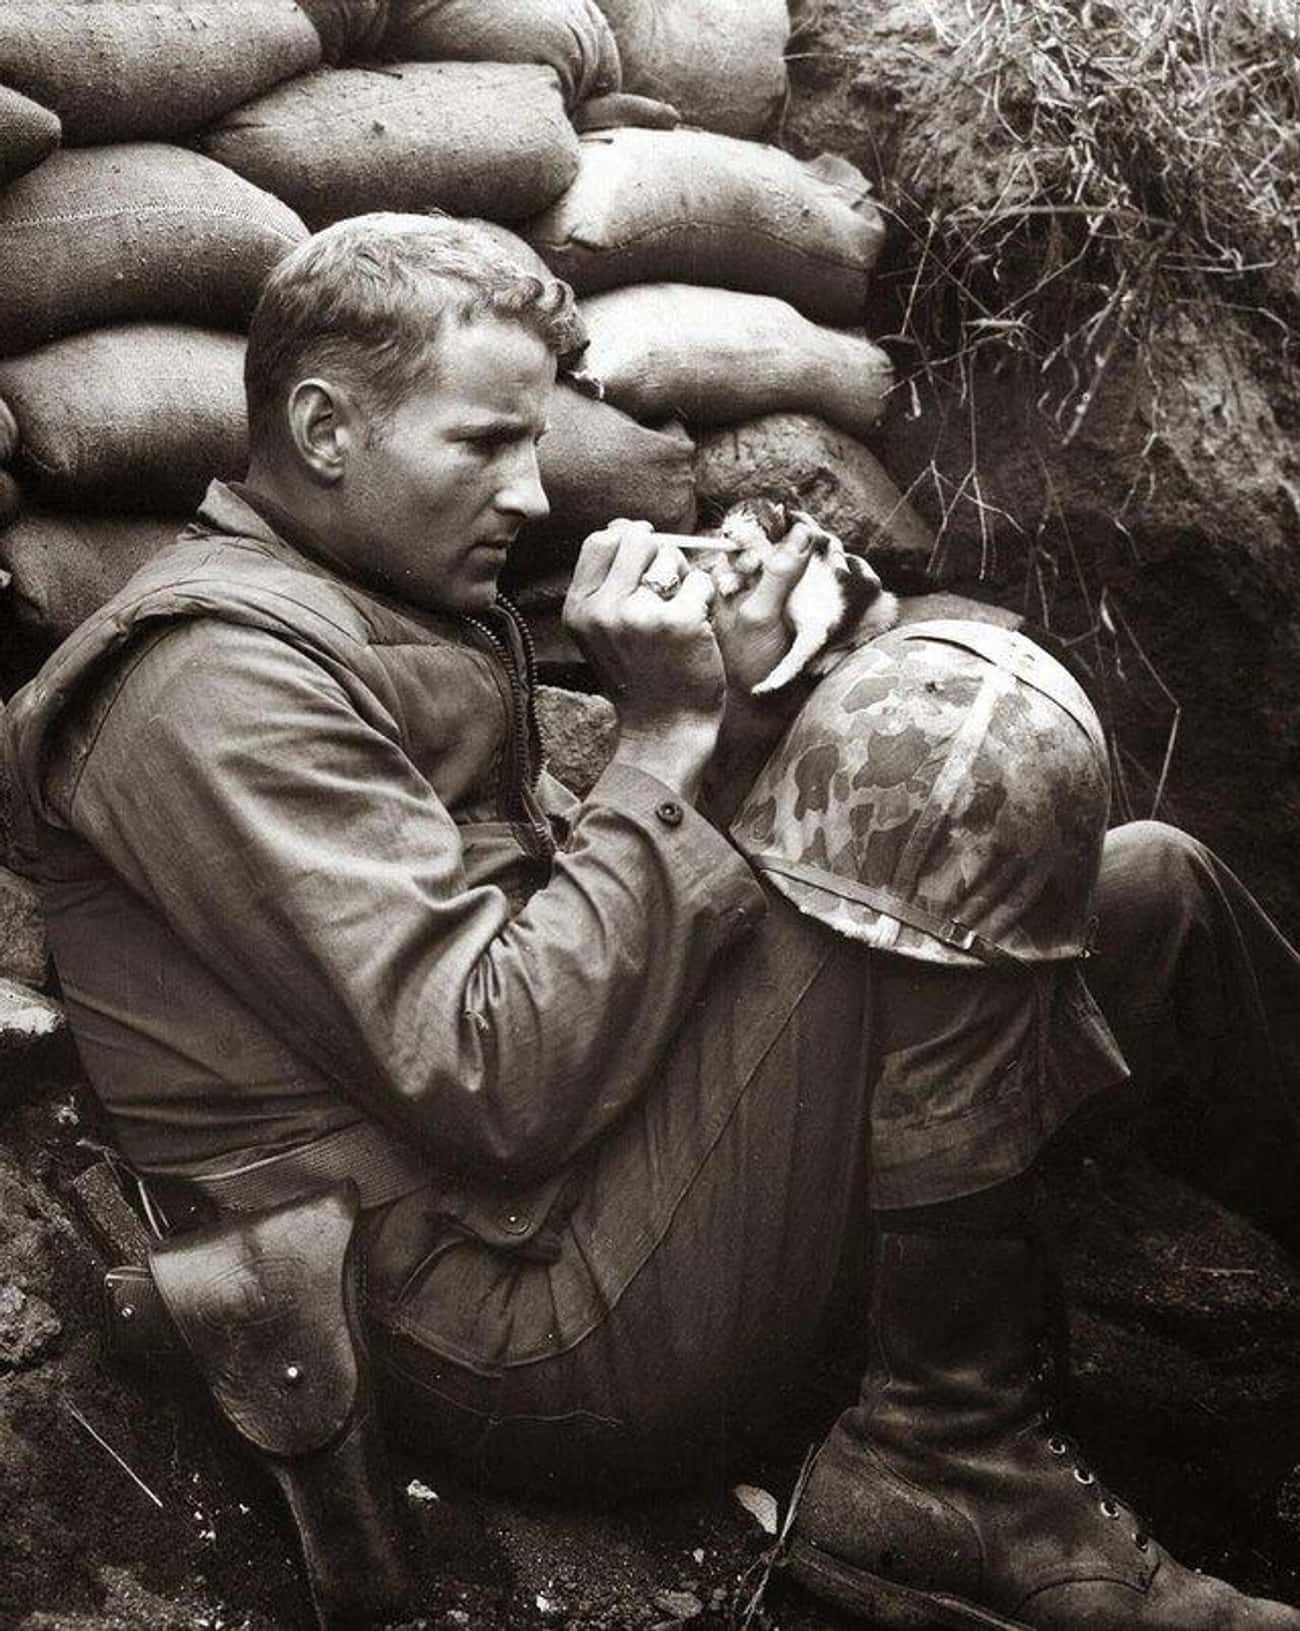 A Marine Hand-Feeding A Kitten During The Korean War, 1952